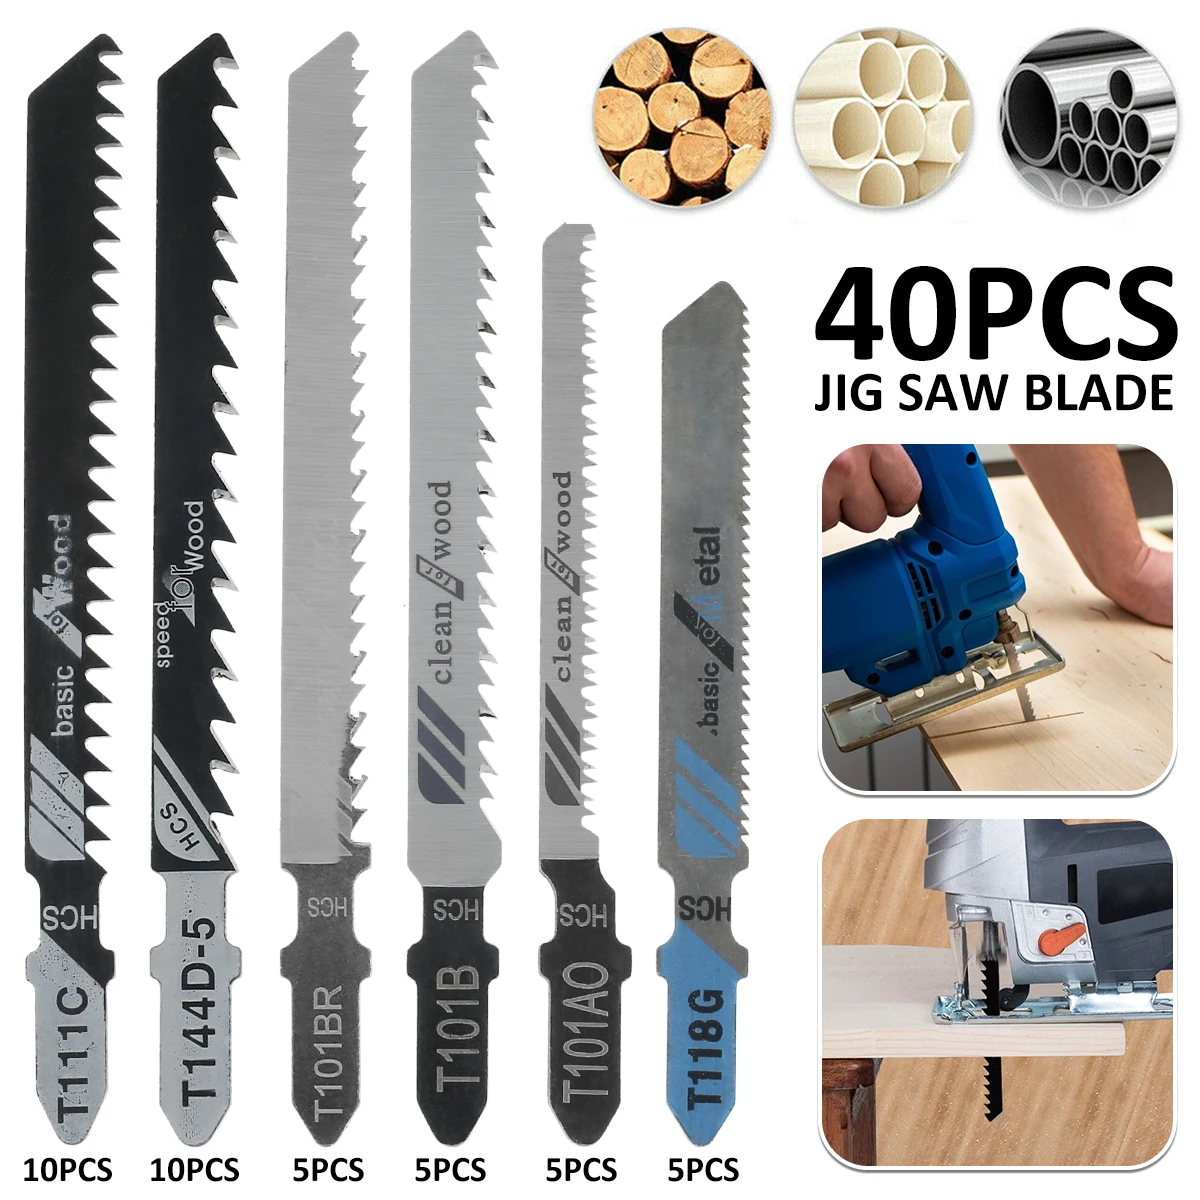 

40Pcs Jig Saw Blade Jigsaw Blades Set Metal Wood Assorted Blades for Wood ,metal Cutting T144D/T101B/T111C/T118G Power Tool Saw